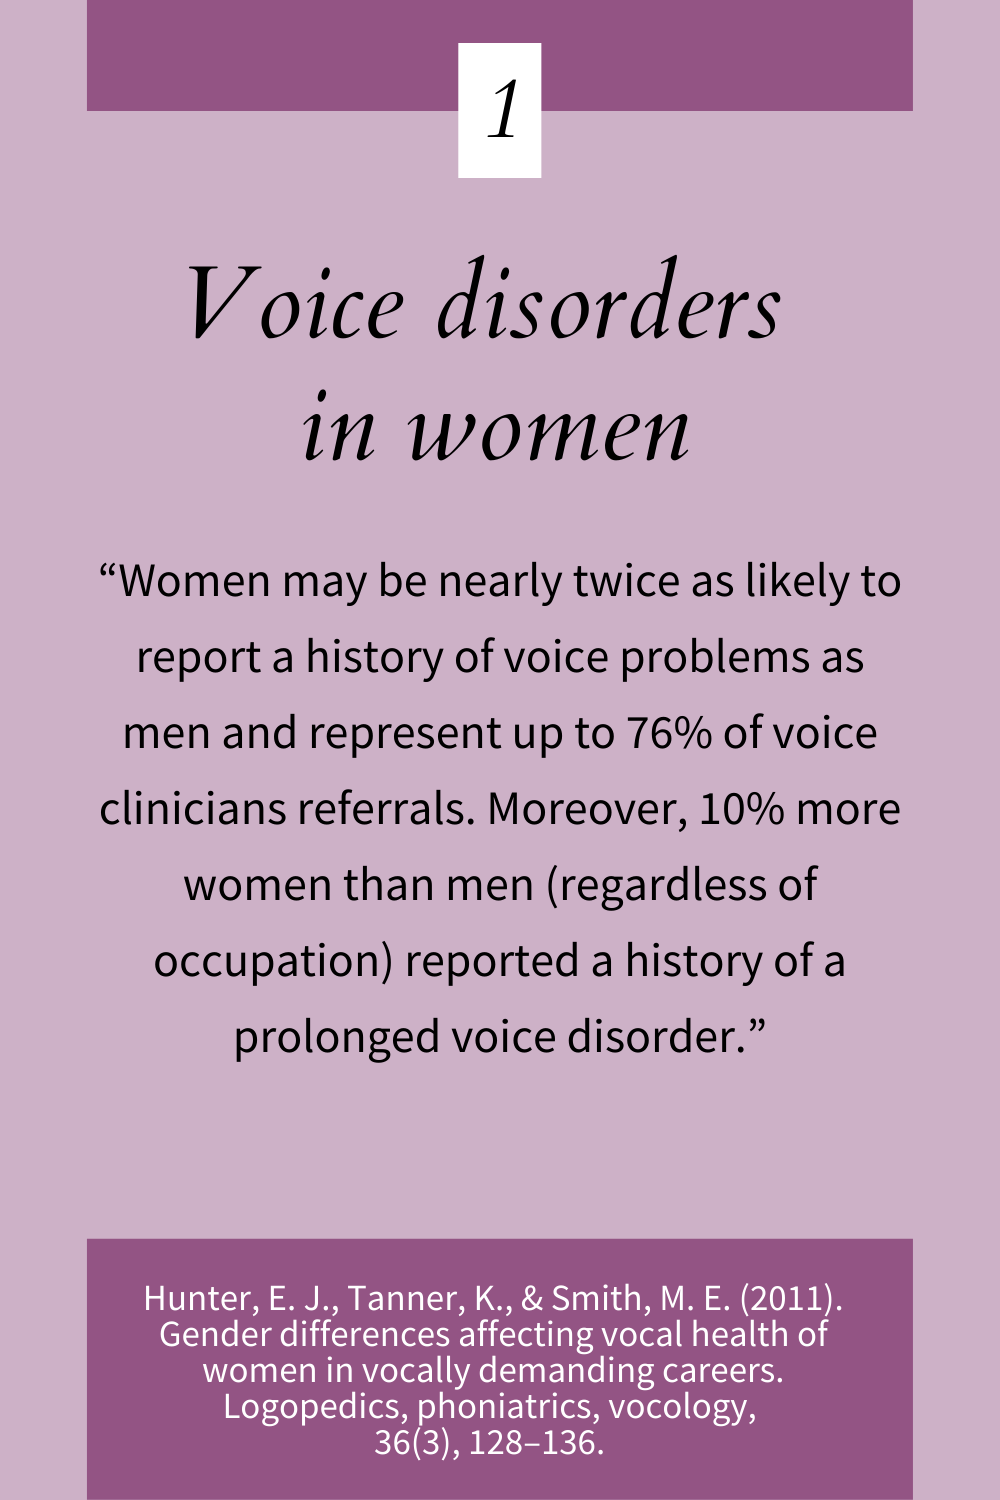 Voice disorders in women (1/4)